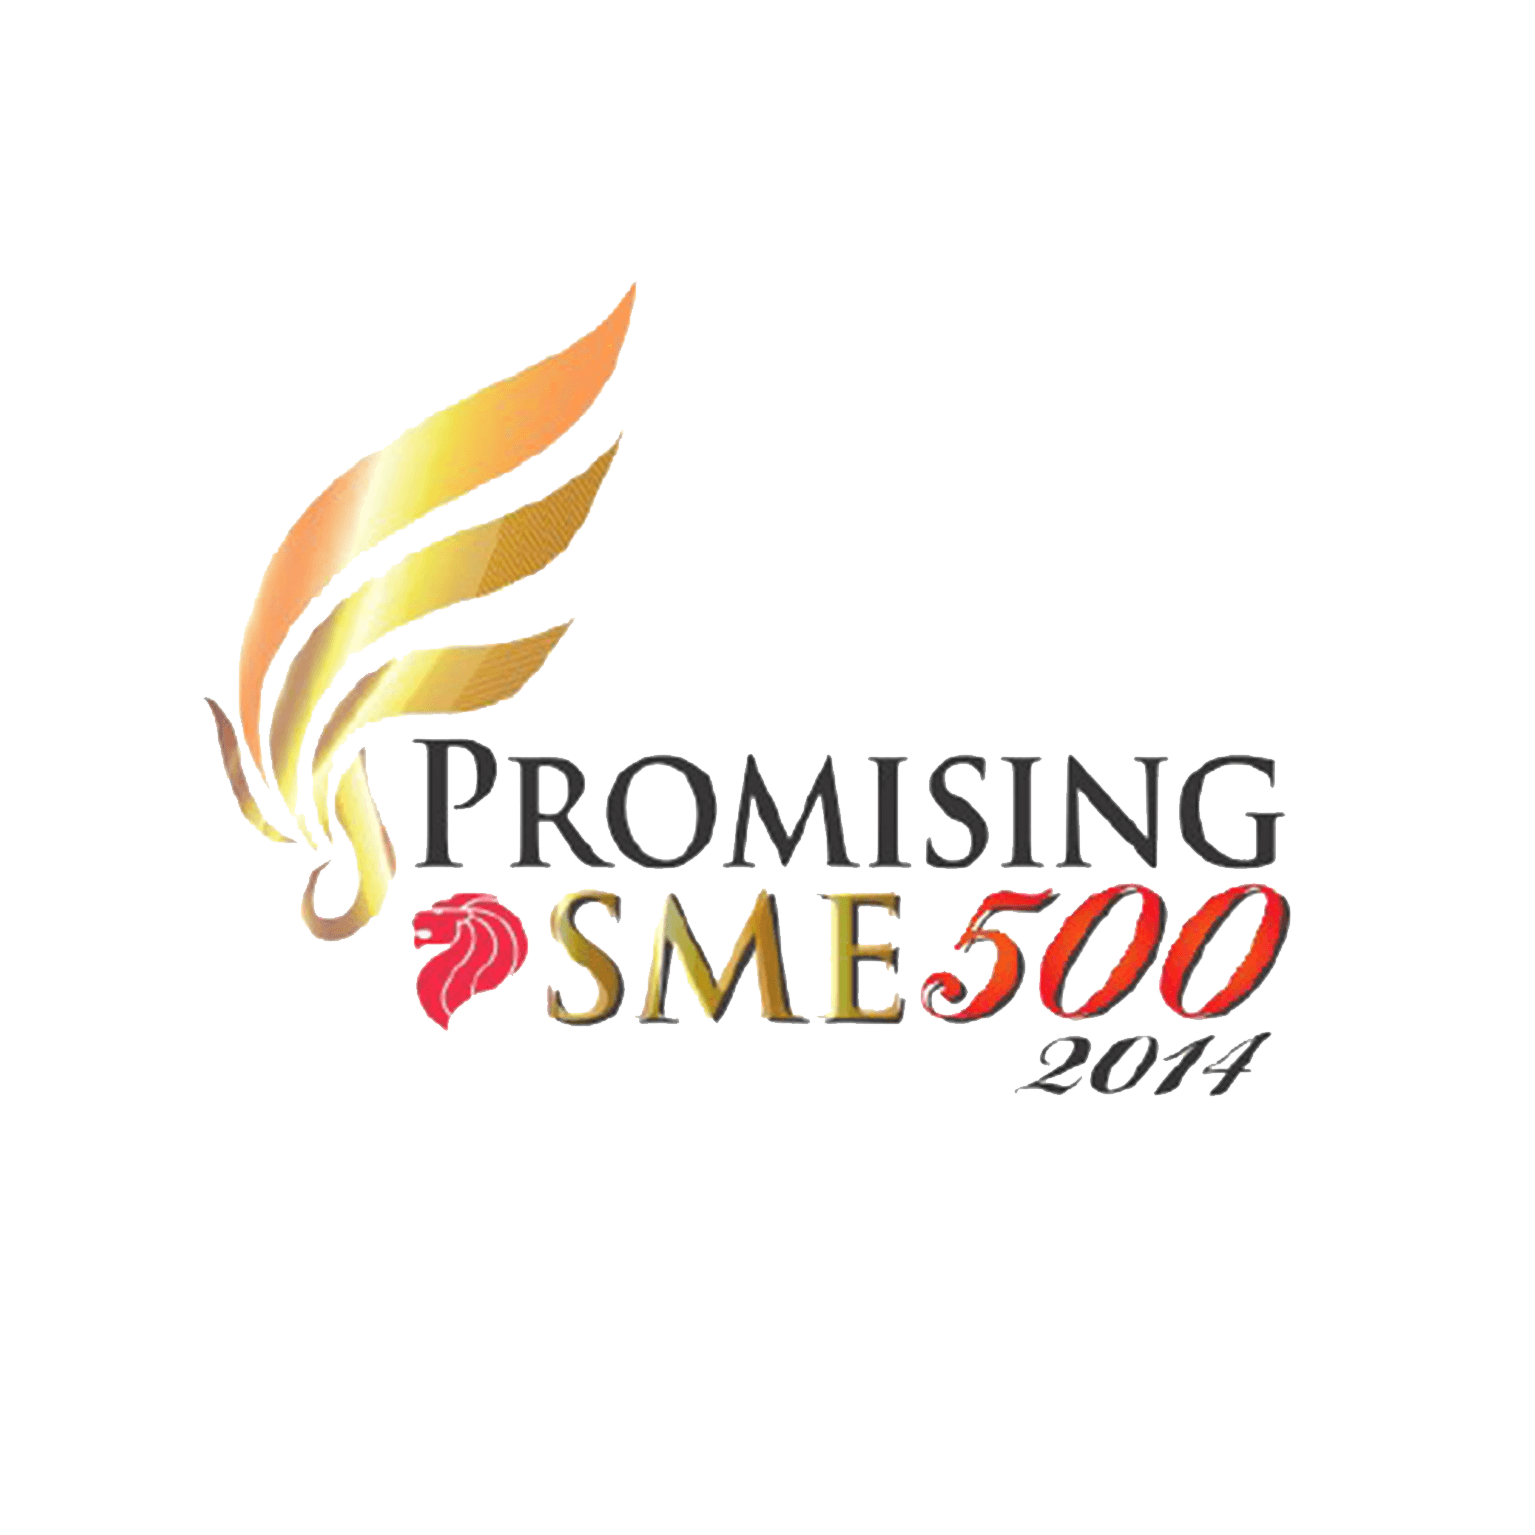 //cutislaserclinics.com/wp-content/uploads/2021/01/2014-PROMISING-SME-500-BUSINESS-LUMINARY-2.png